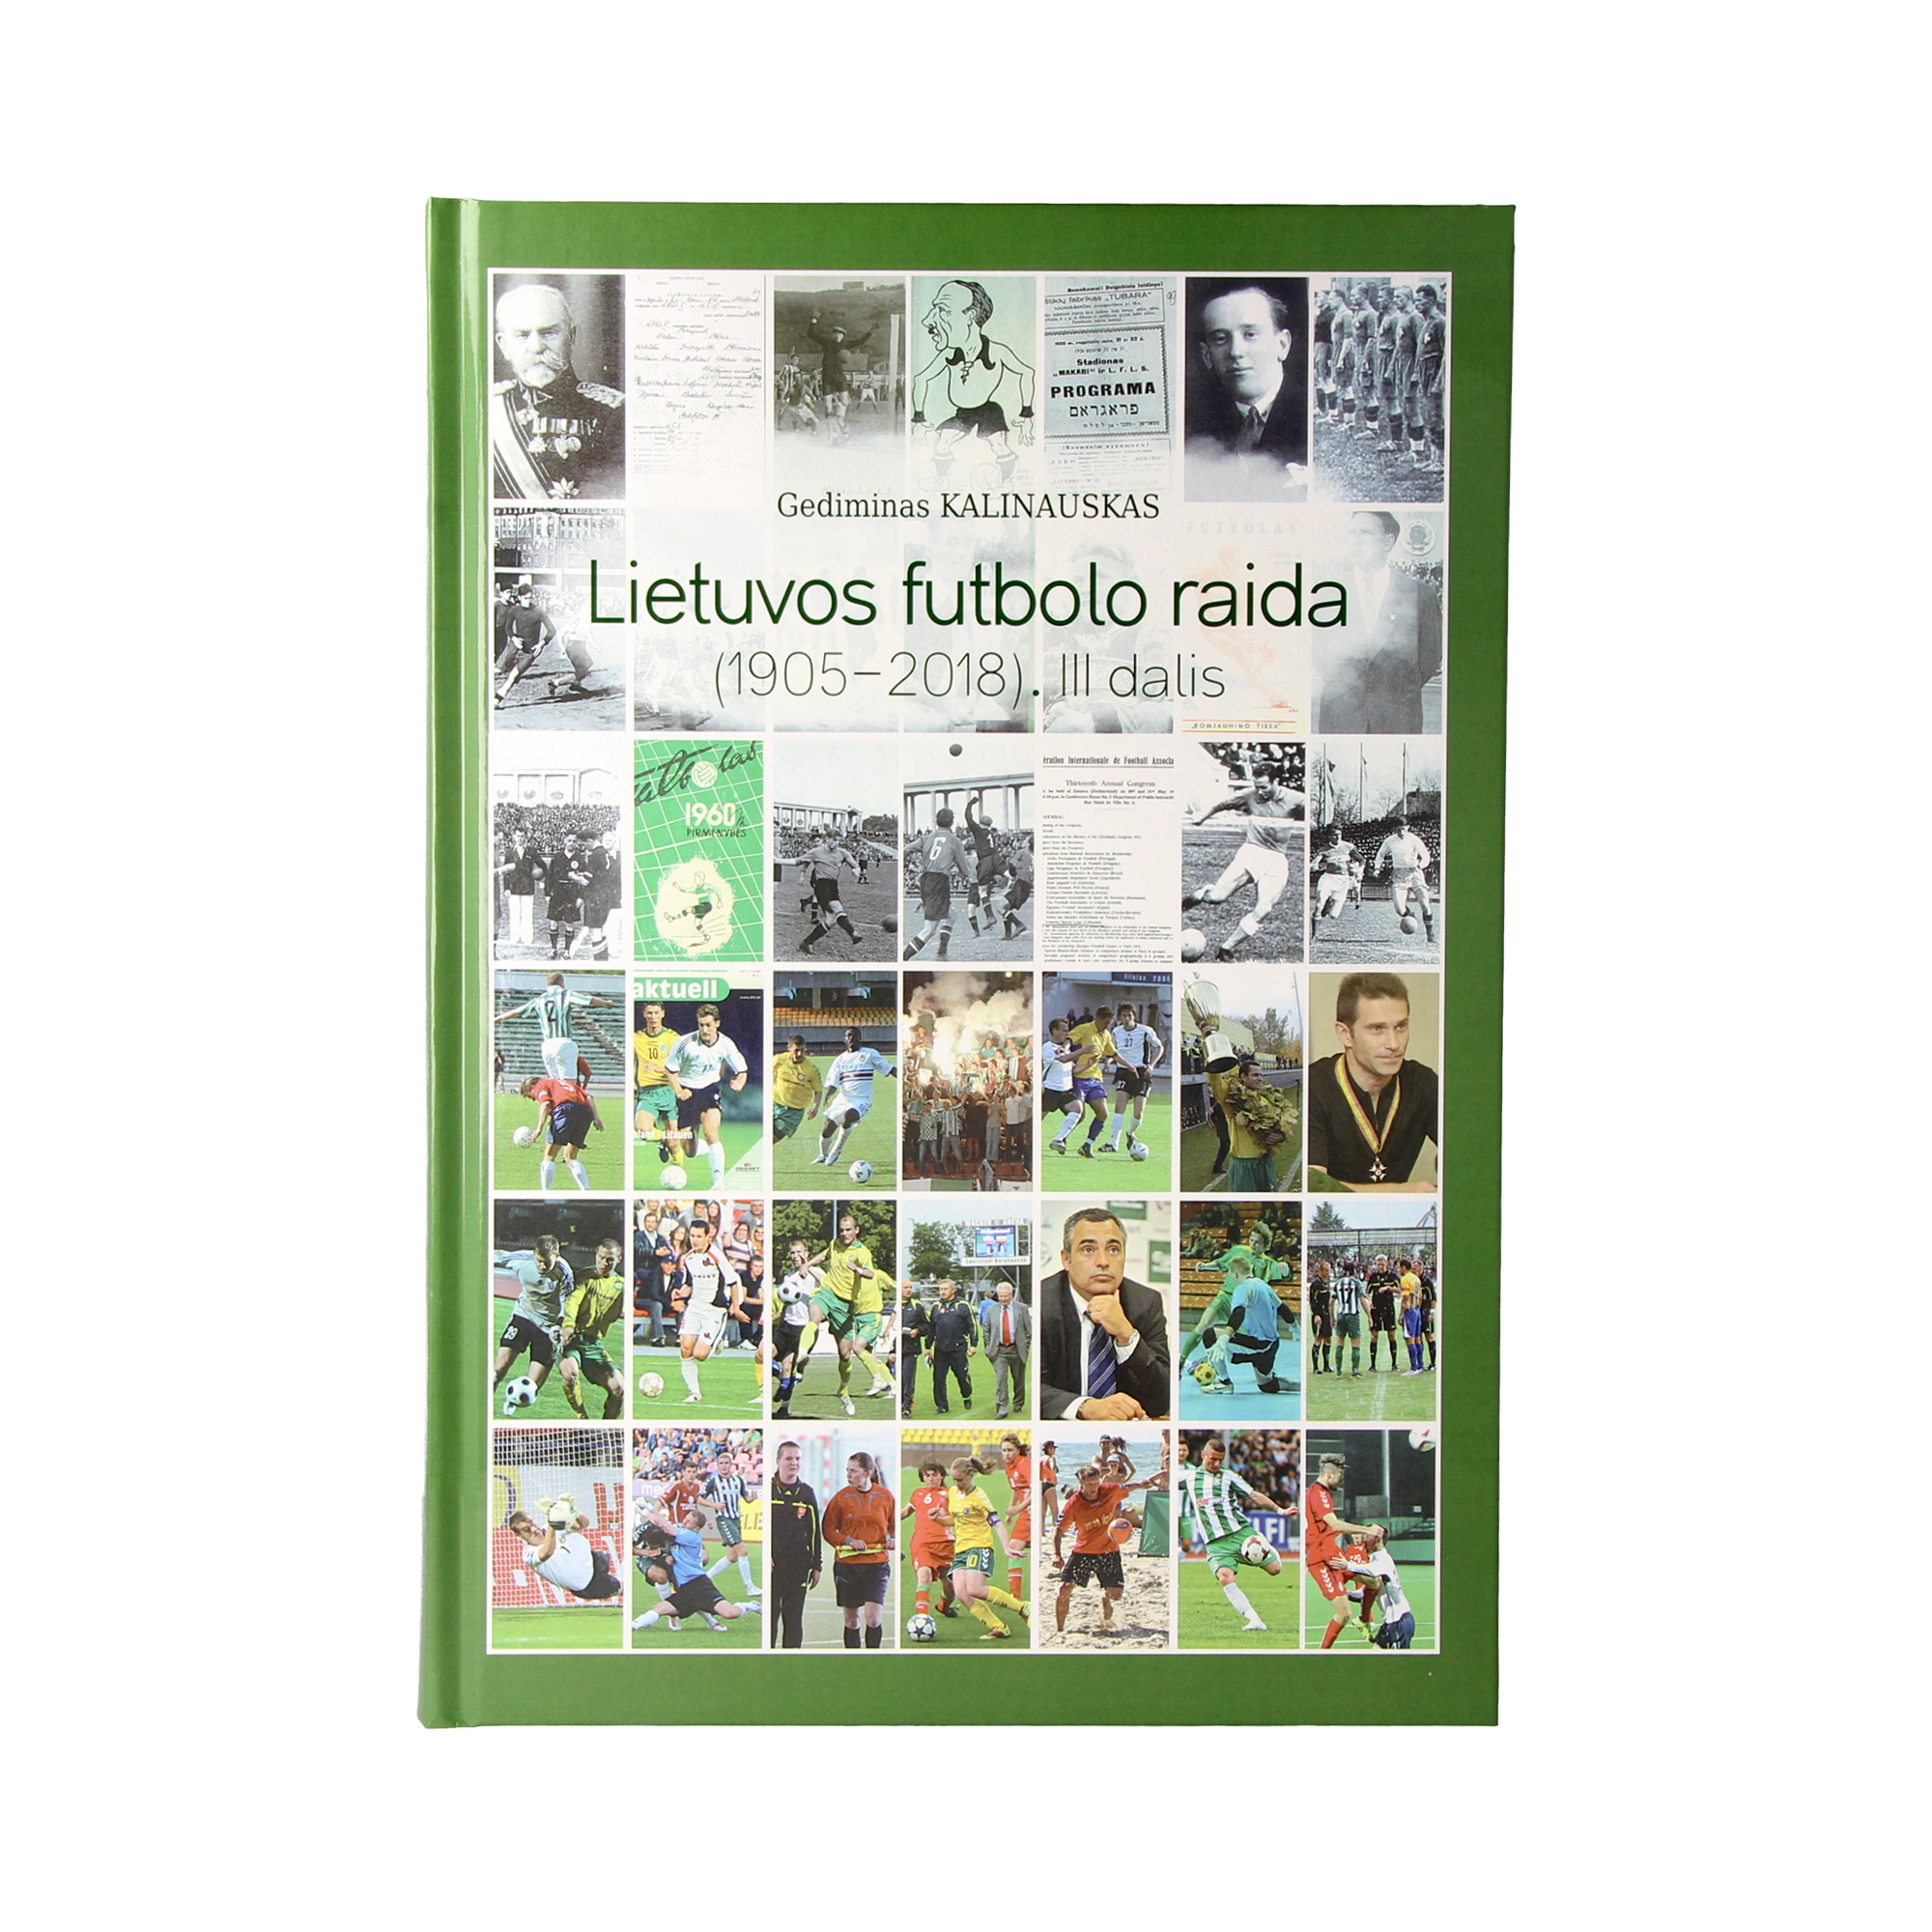 KNYGA „LIETUVOS FUTBOLO RAIDA (1905–2018)“ III DALIS